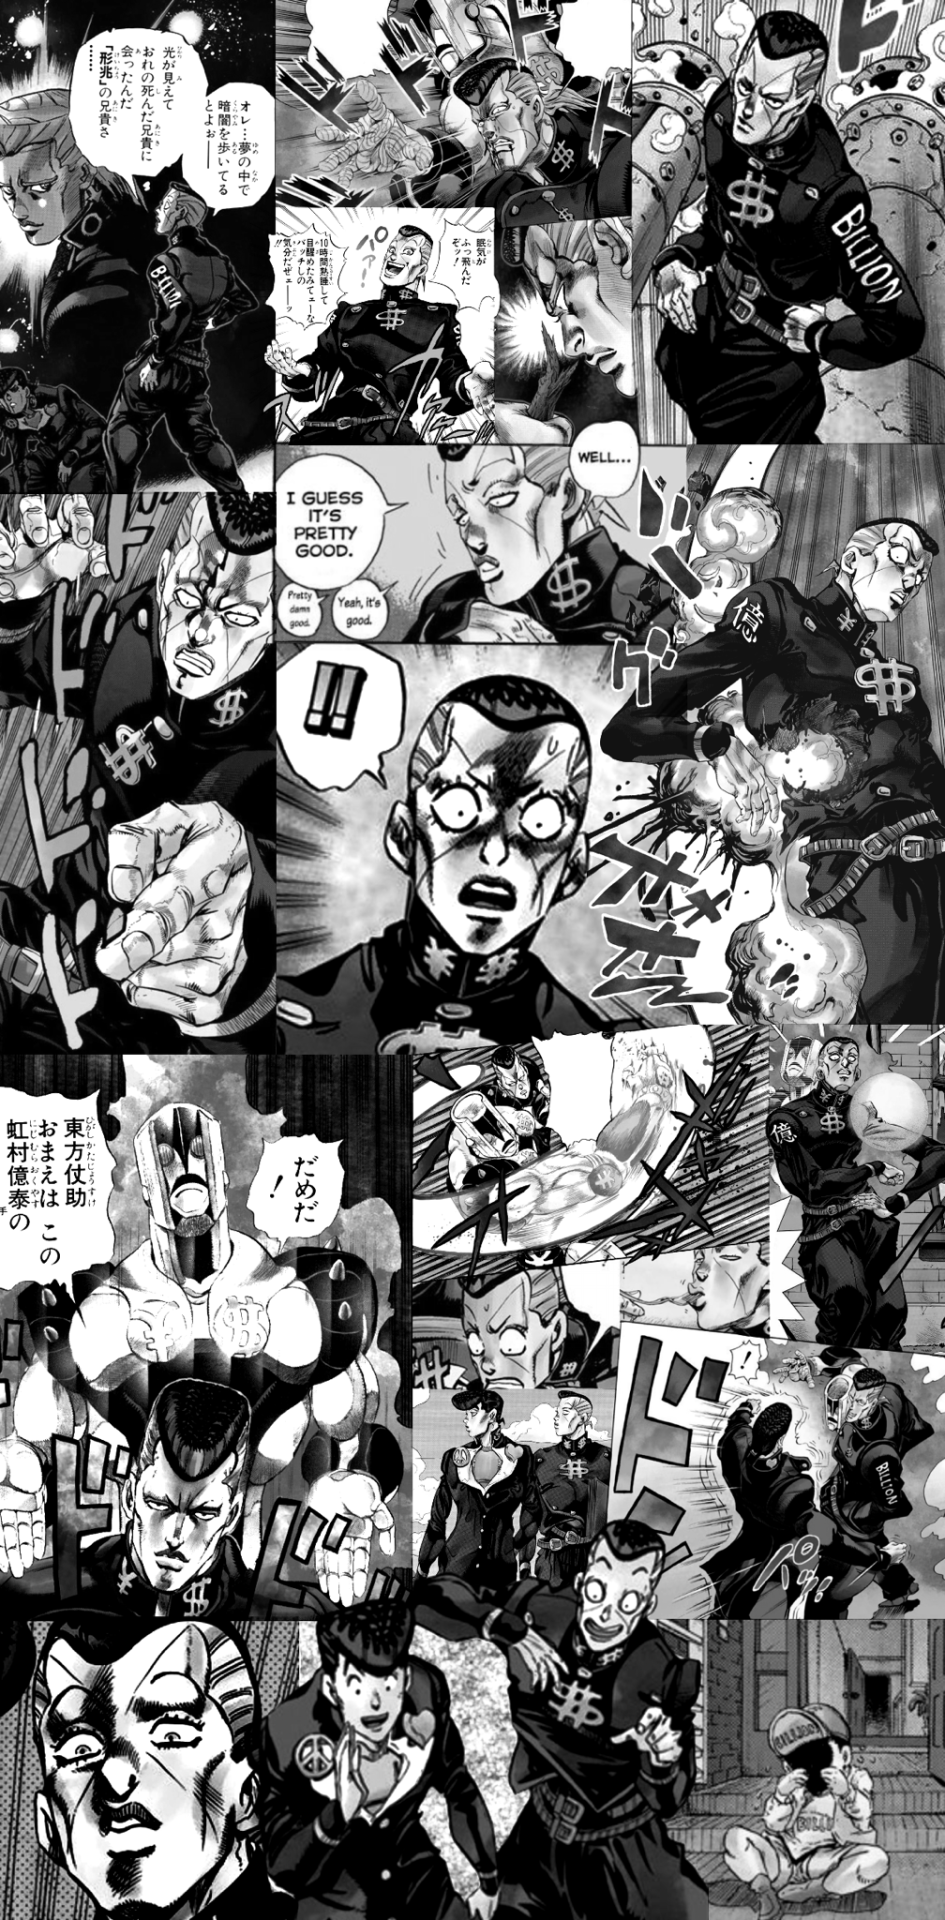 Jjba Manga Panels Wallpapers